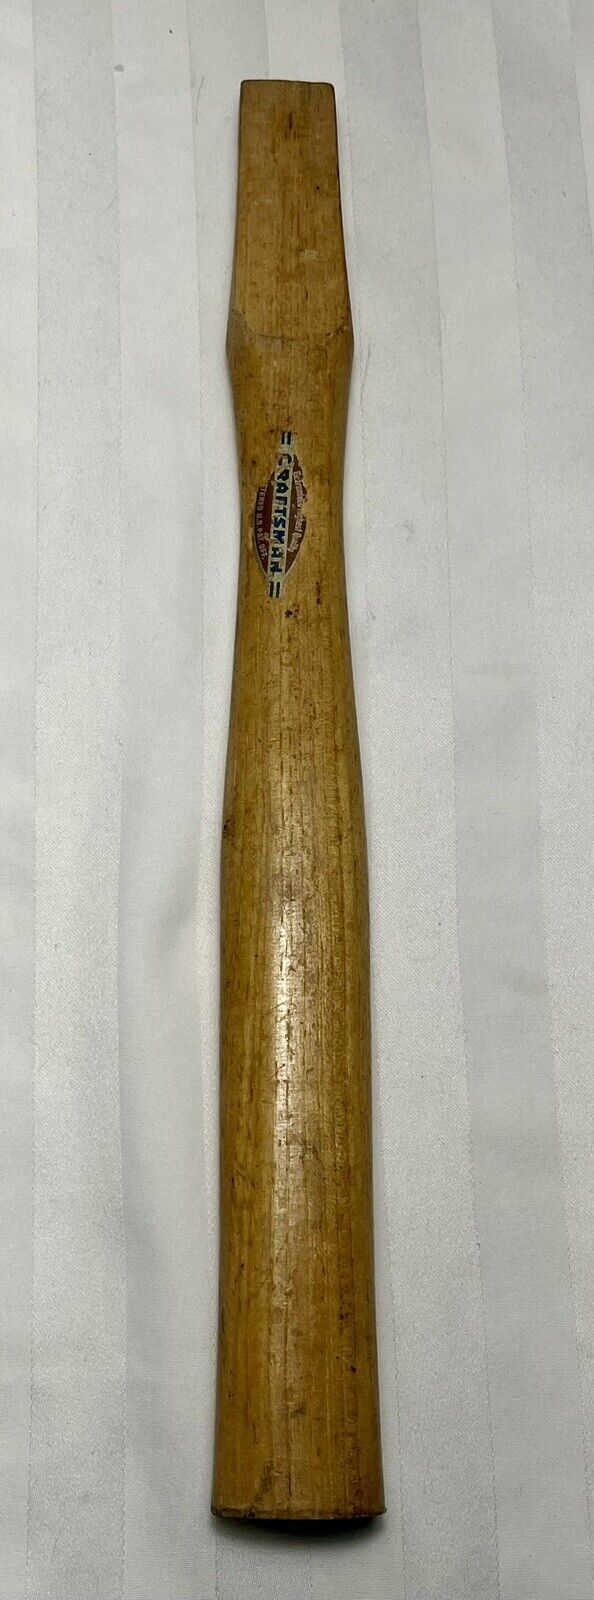 Vintage 1940s-50s Craftsman Wooden Hammer Handle 14”- New Old Stock